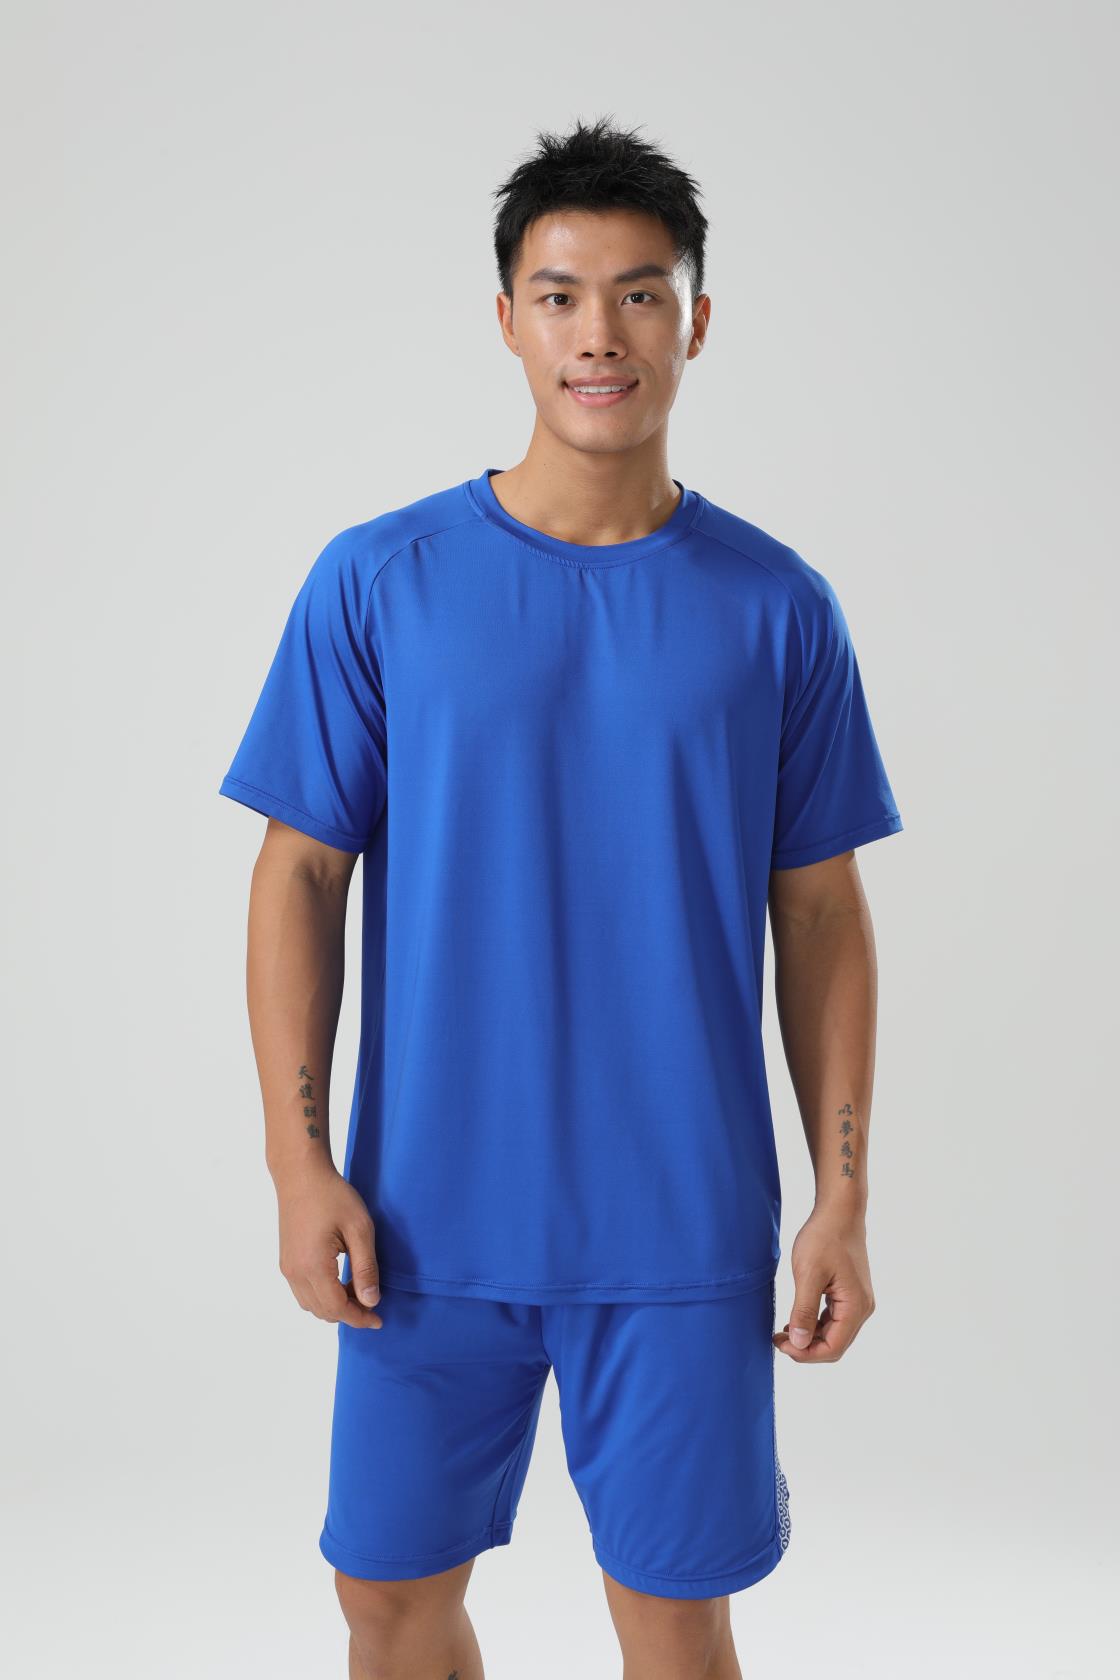 Long Sleeve Blue Shirts